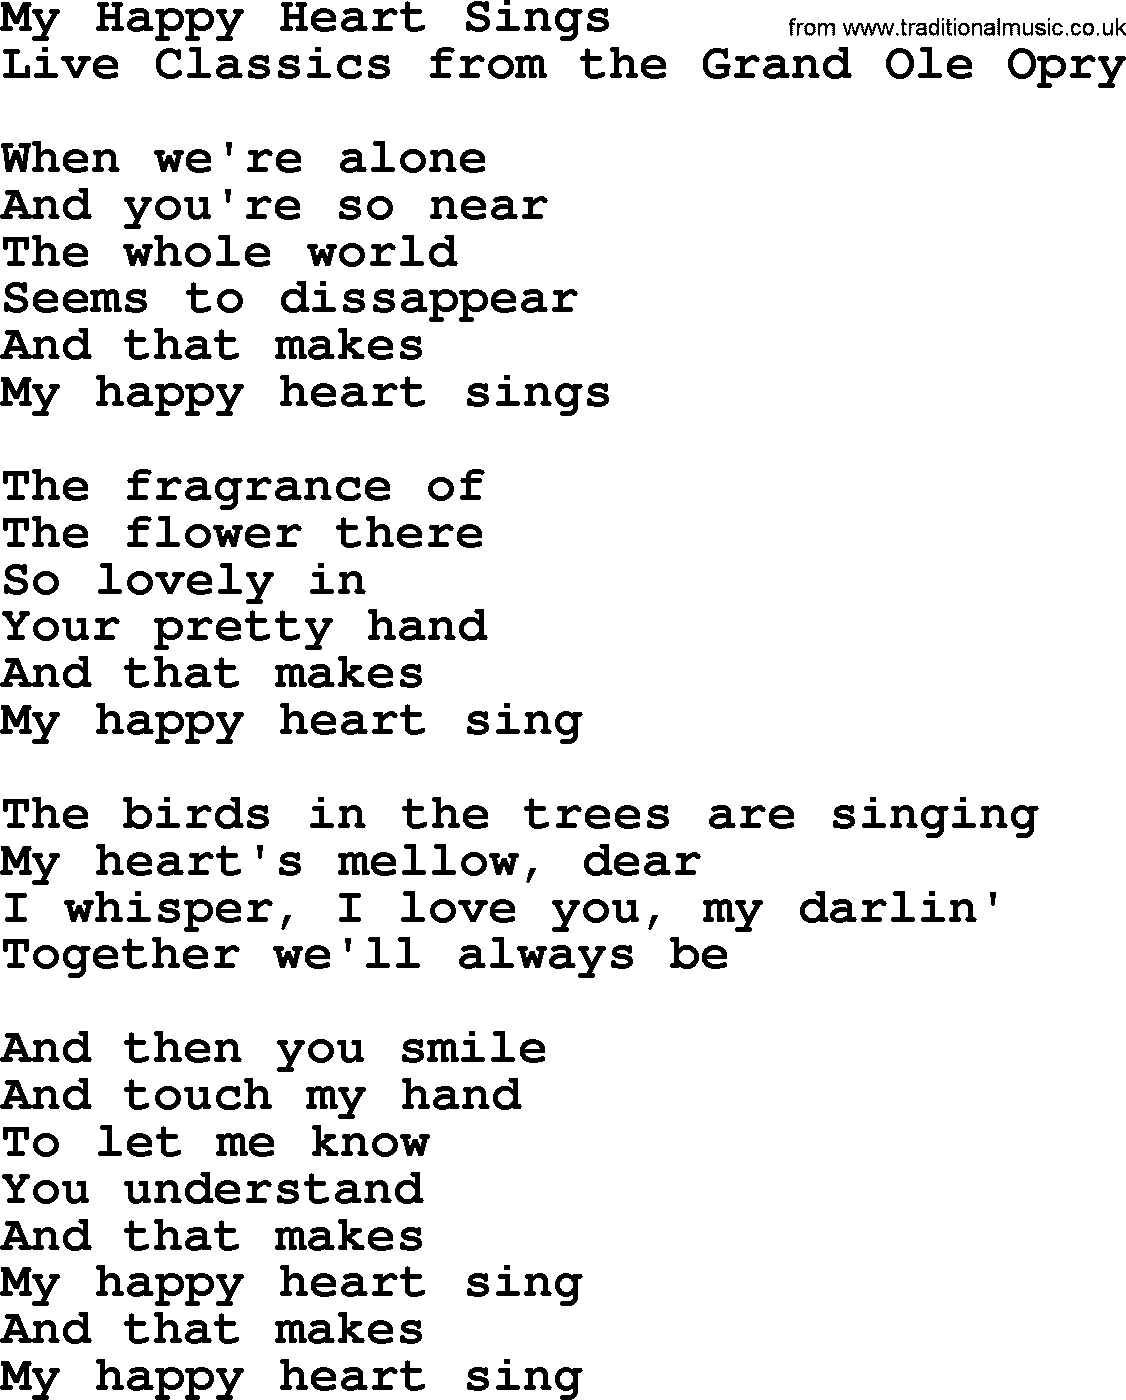 Marty Robbins song: My Happy Heart Sings, lyrics